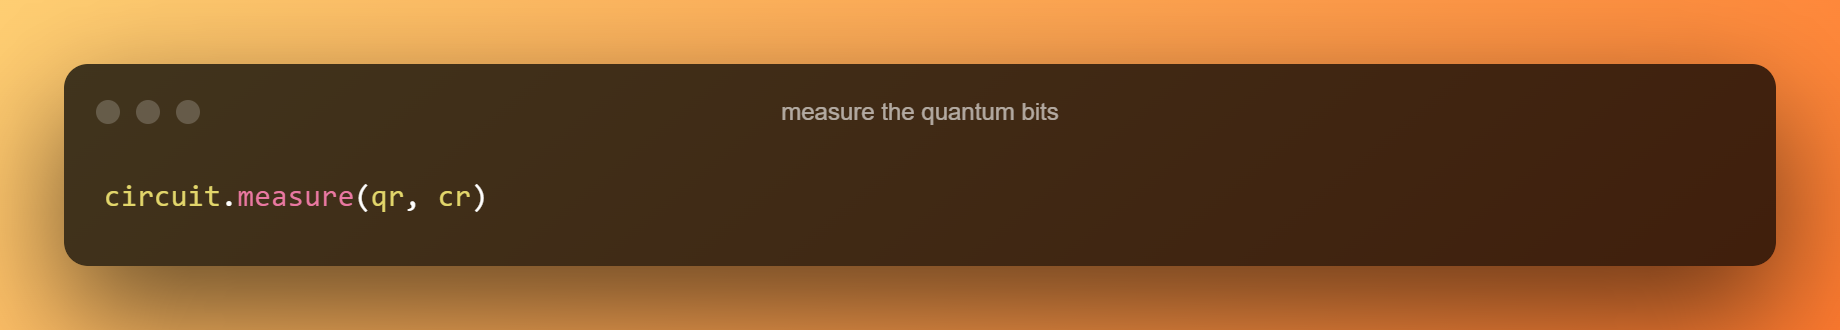 Measure The Quantum Bits